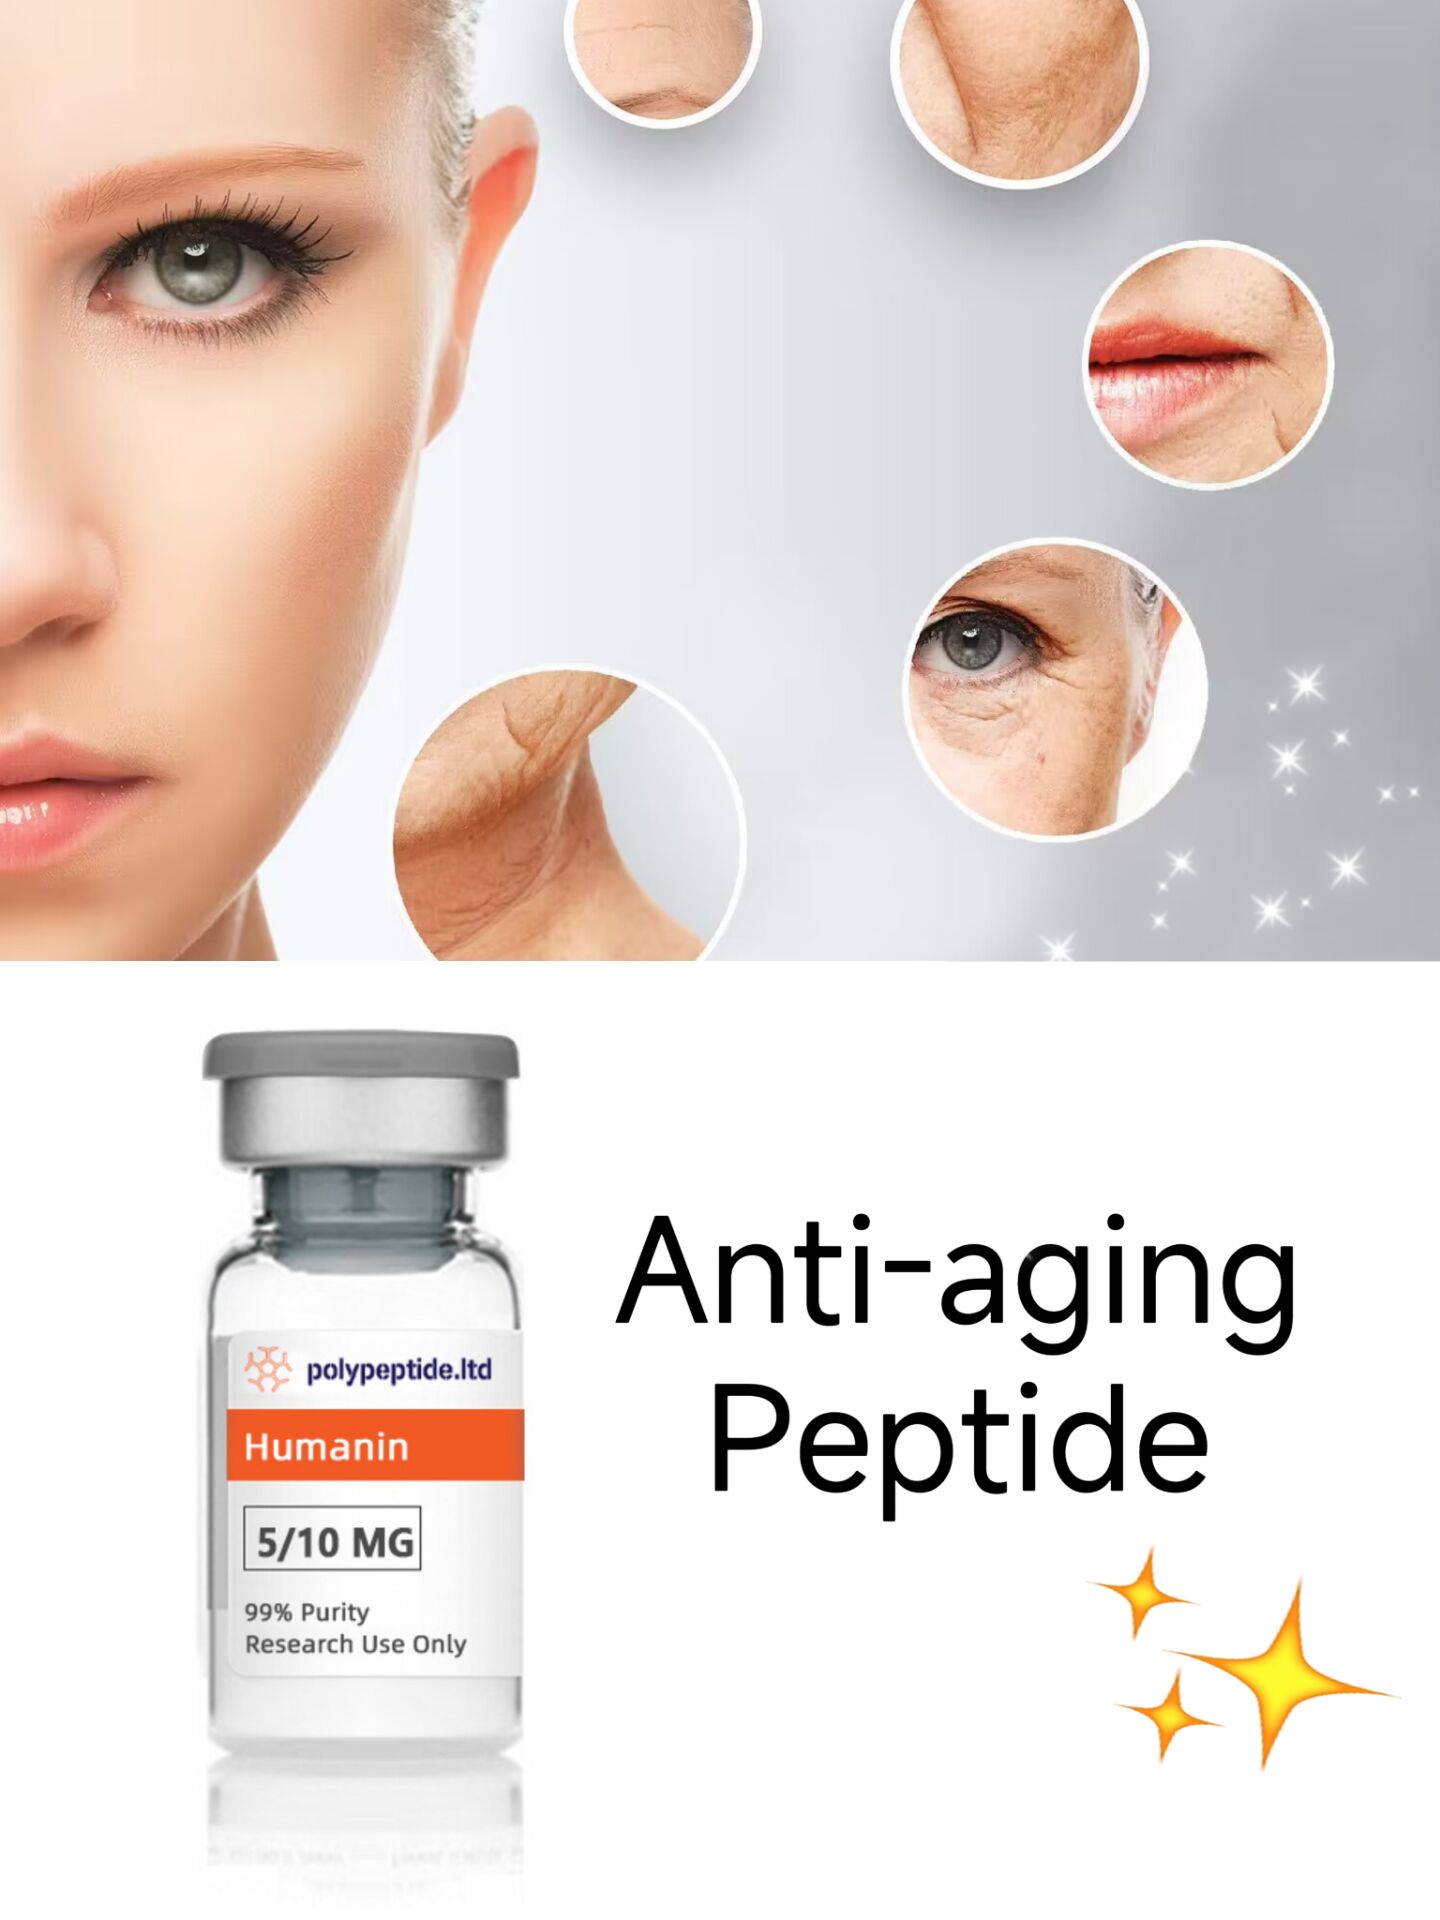 Humanin Top Anti-aging Peptide Supplier-Polypeptide.ltd